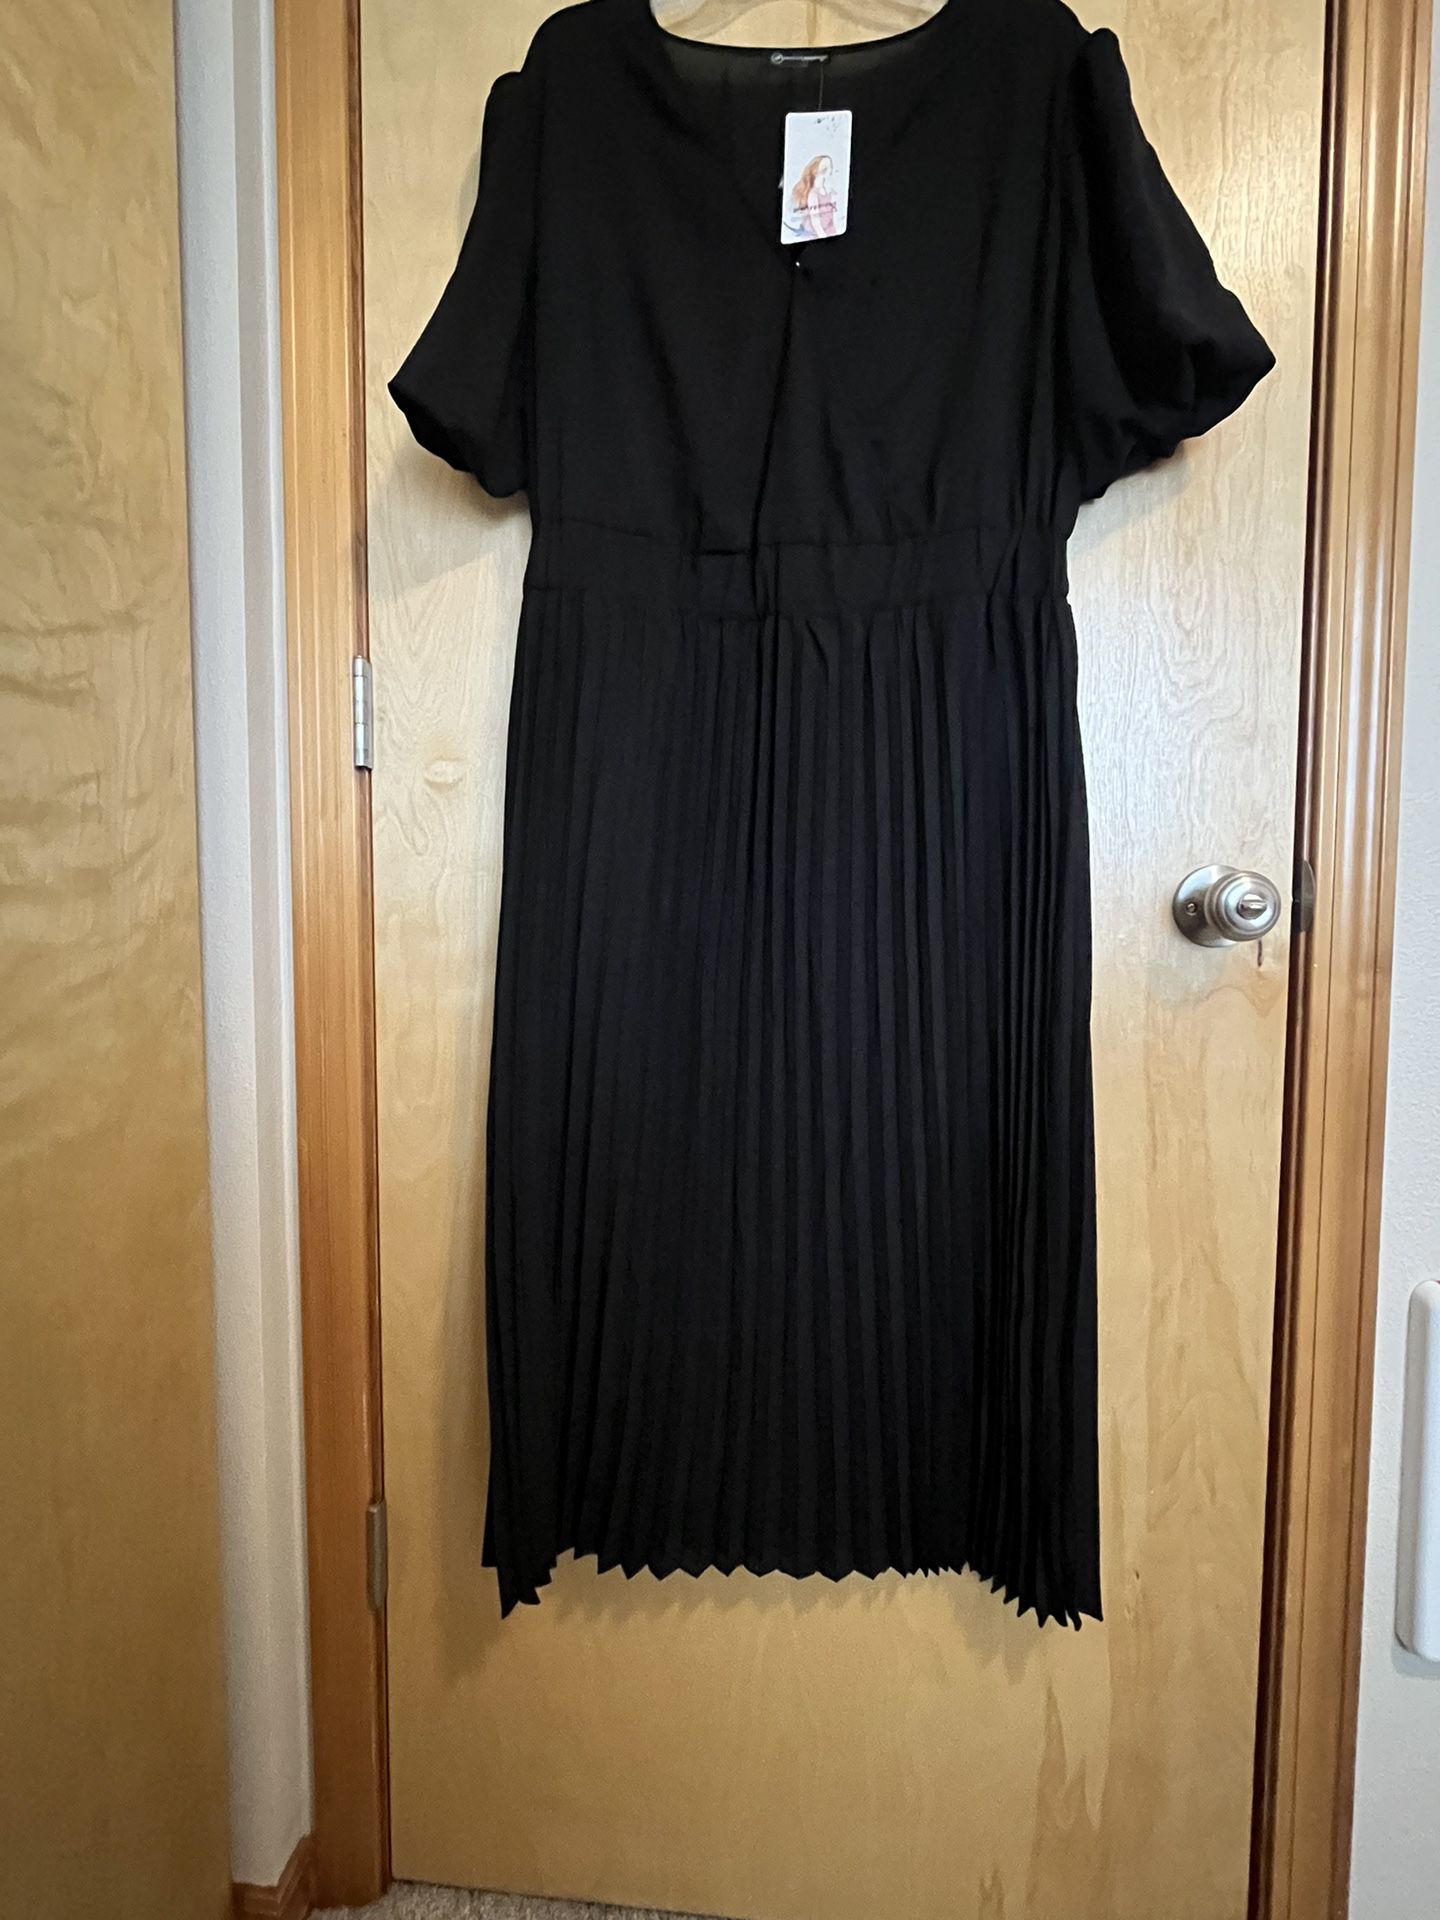 Black Dress Sz XL (14)  Brand New   